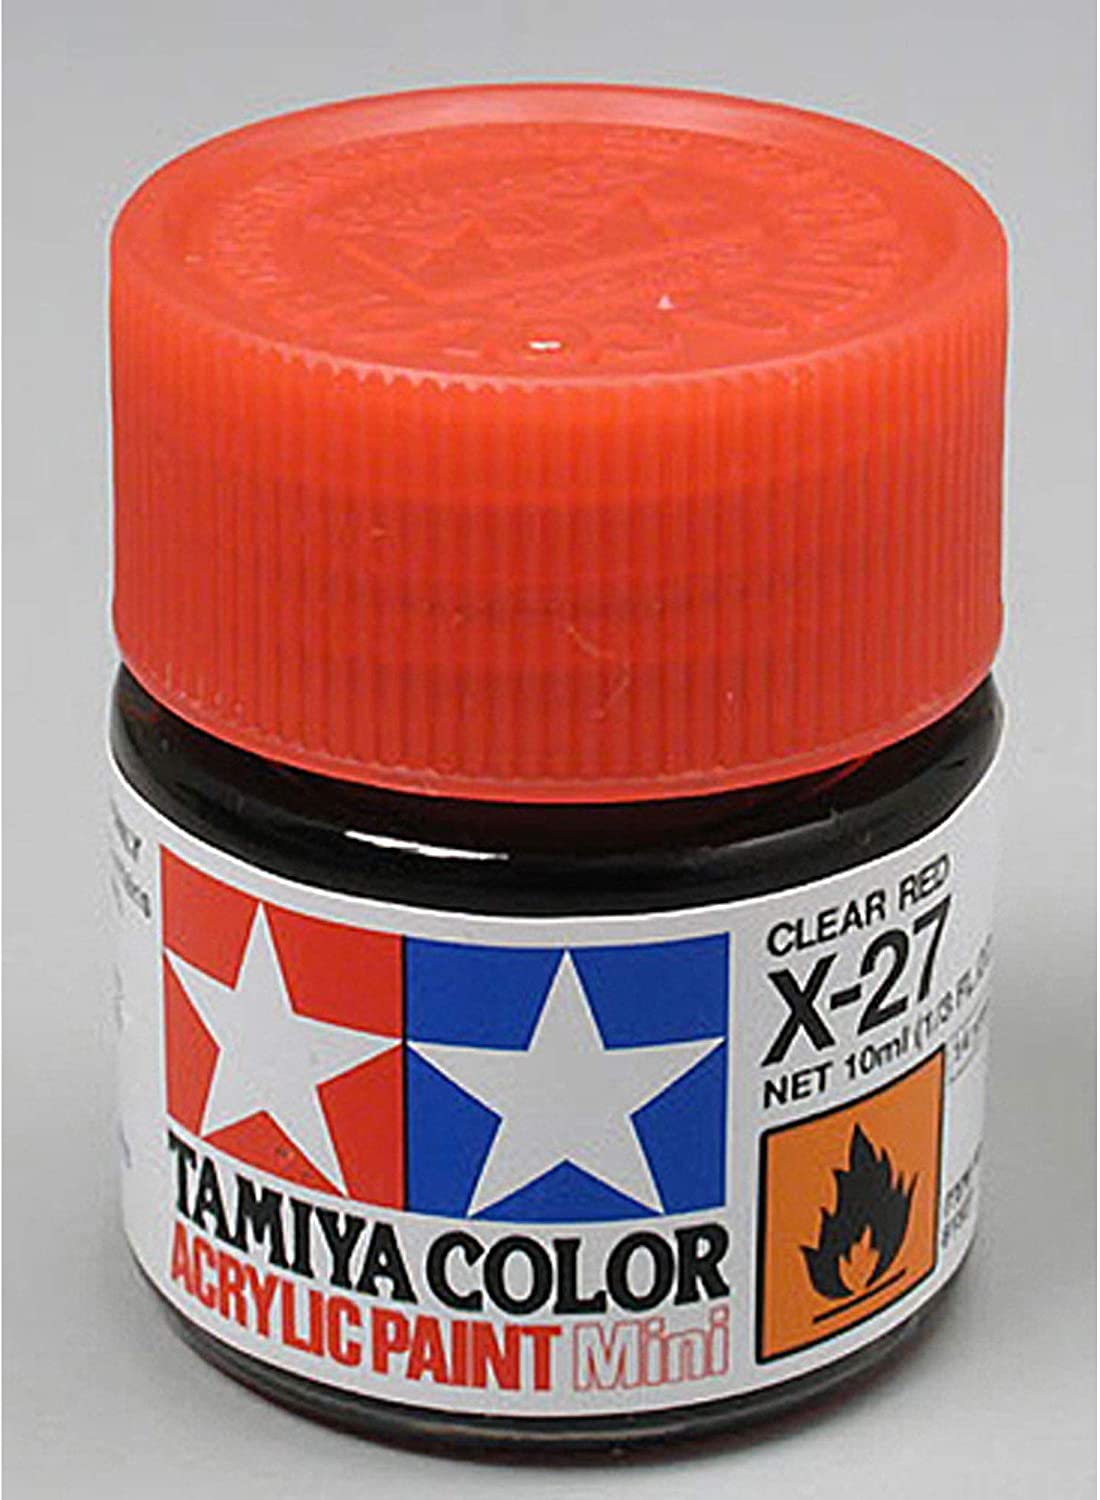 Tamiya Acrylic Mini X-27 Clear Red